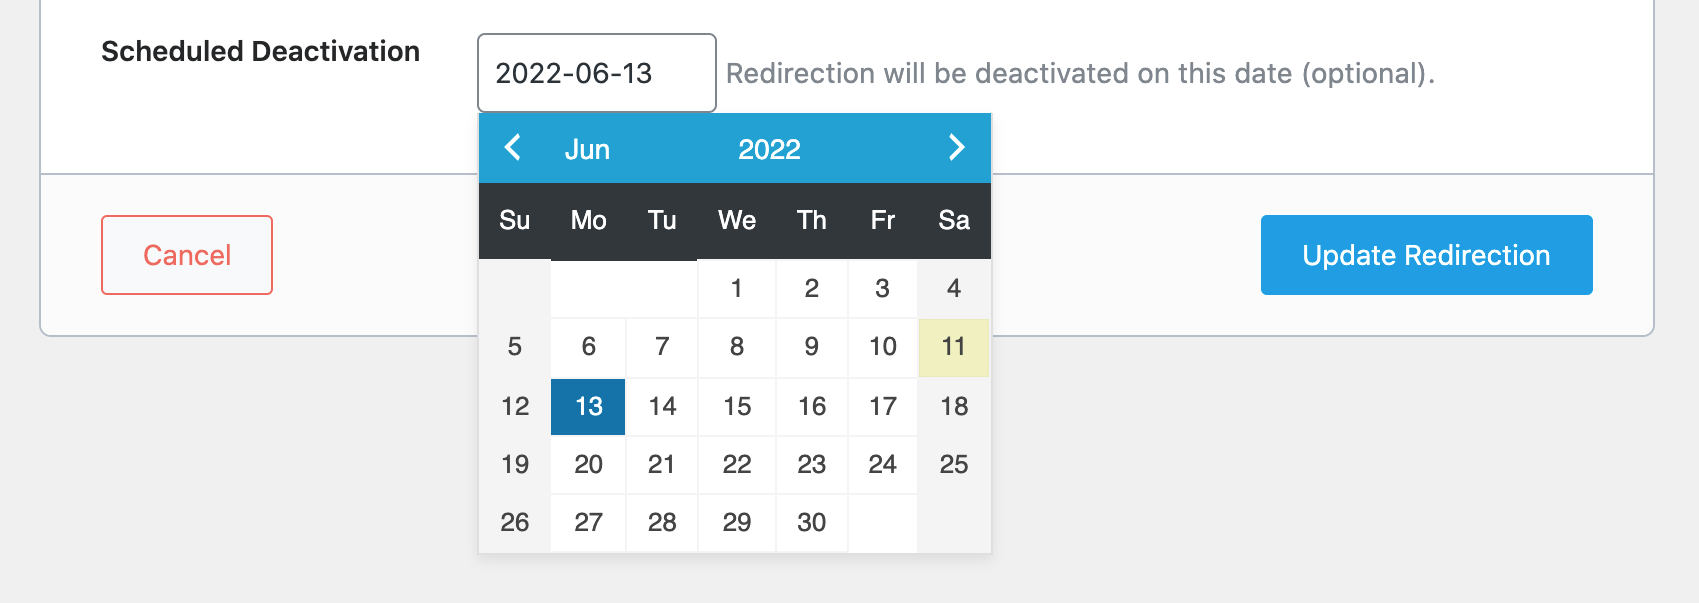 Scheduled Deactivation